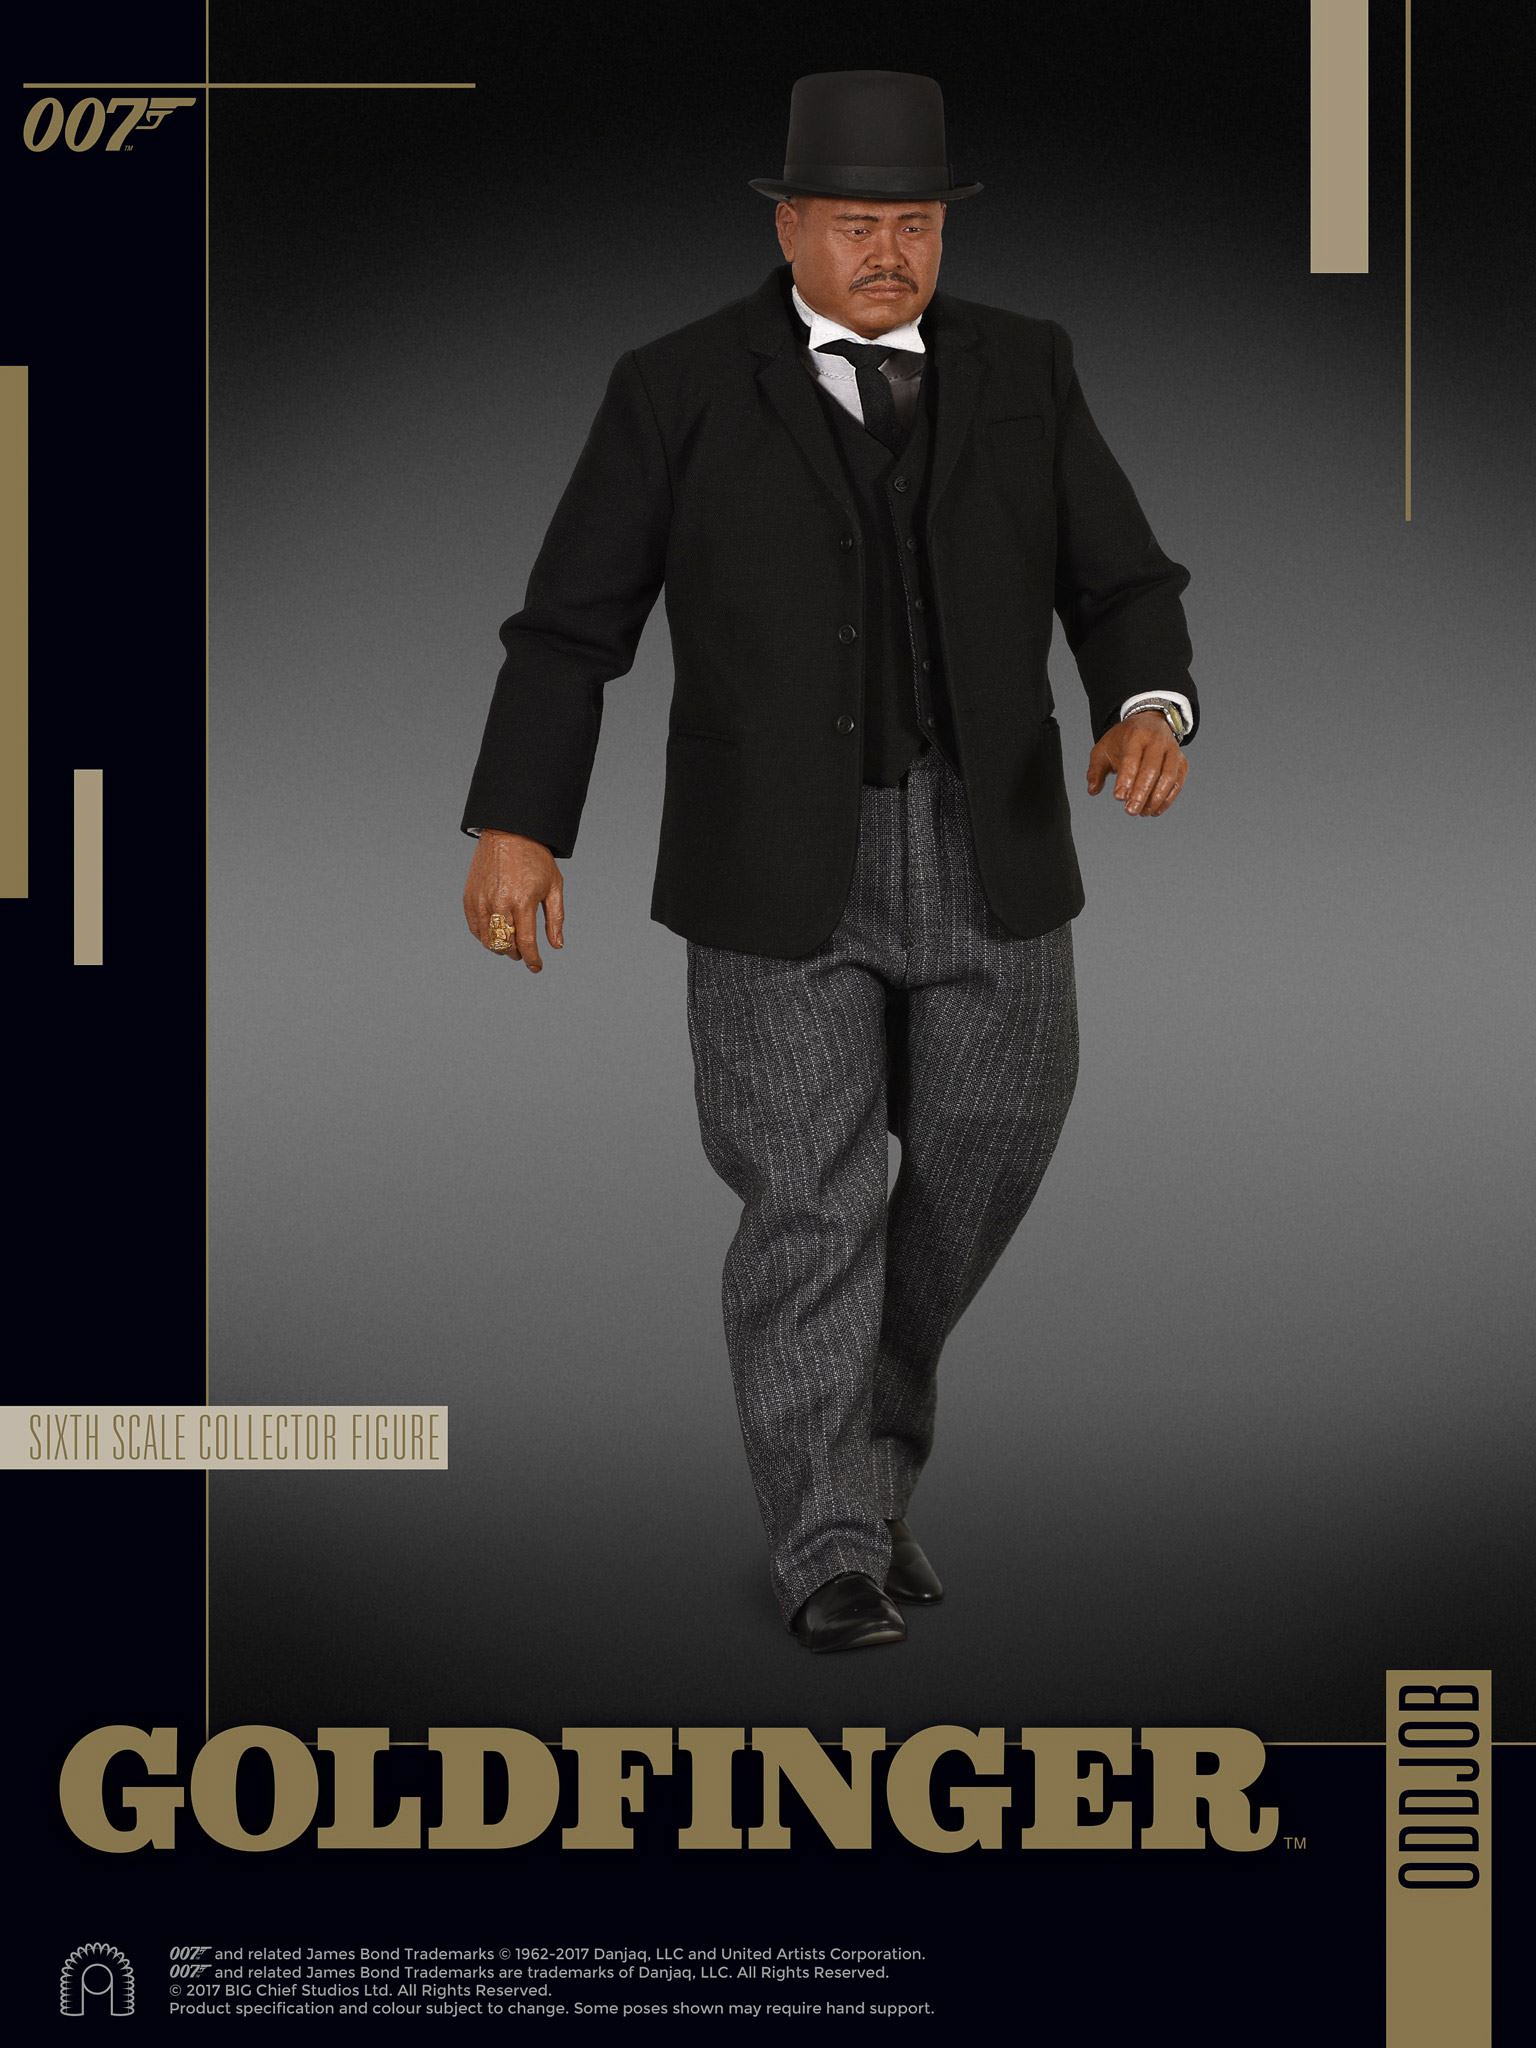 Big-Chief-James-Bond-Goldfinger-Oddjob-Full-Reveal-028.jpg